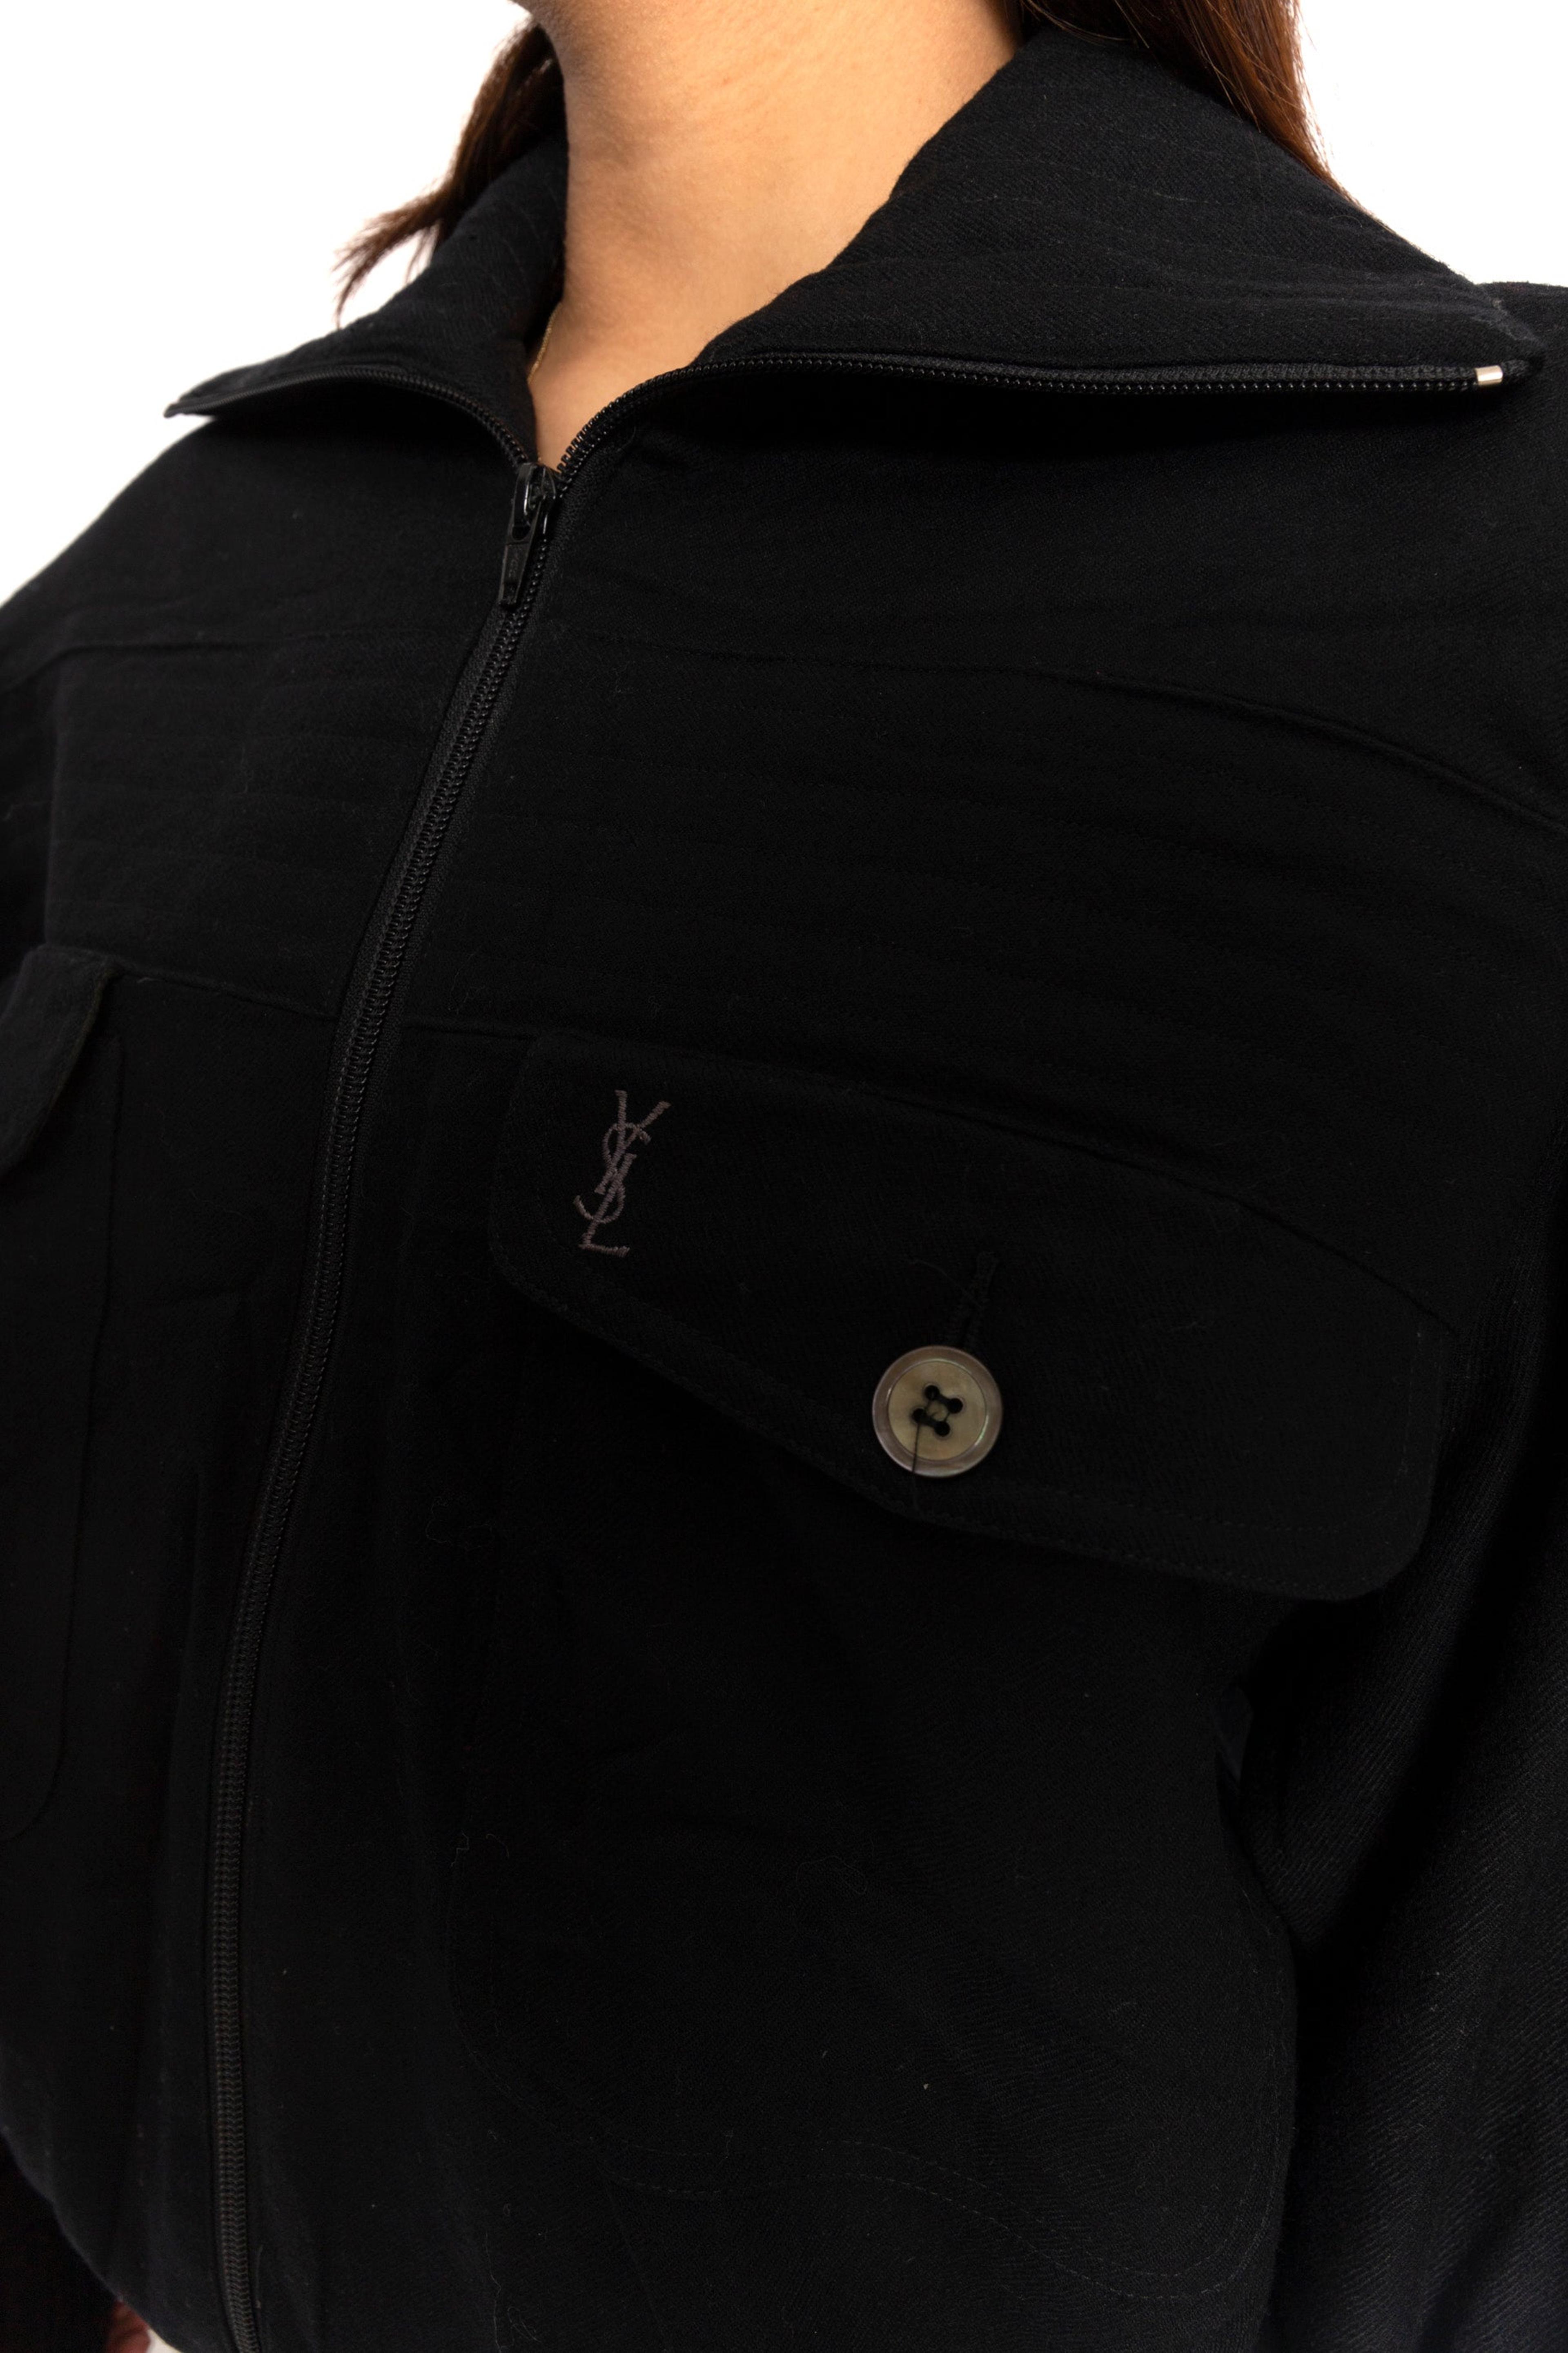 Alternate View 2 of Yves Saint Laurent Jacket